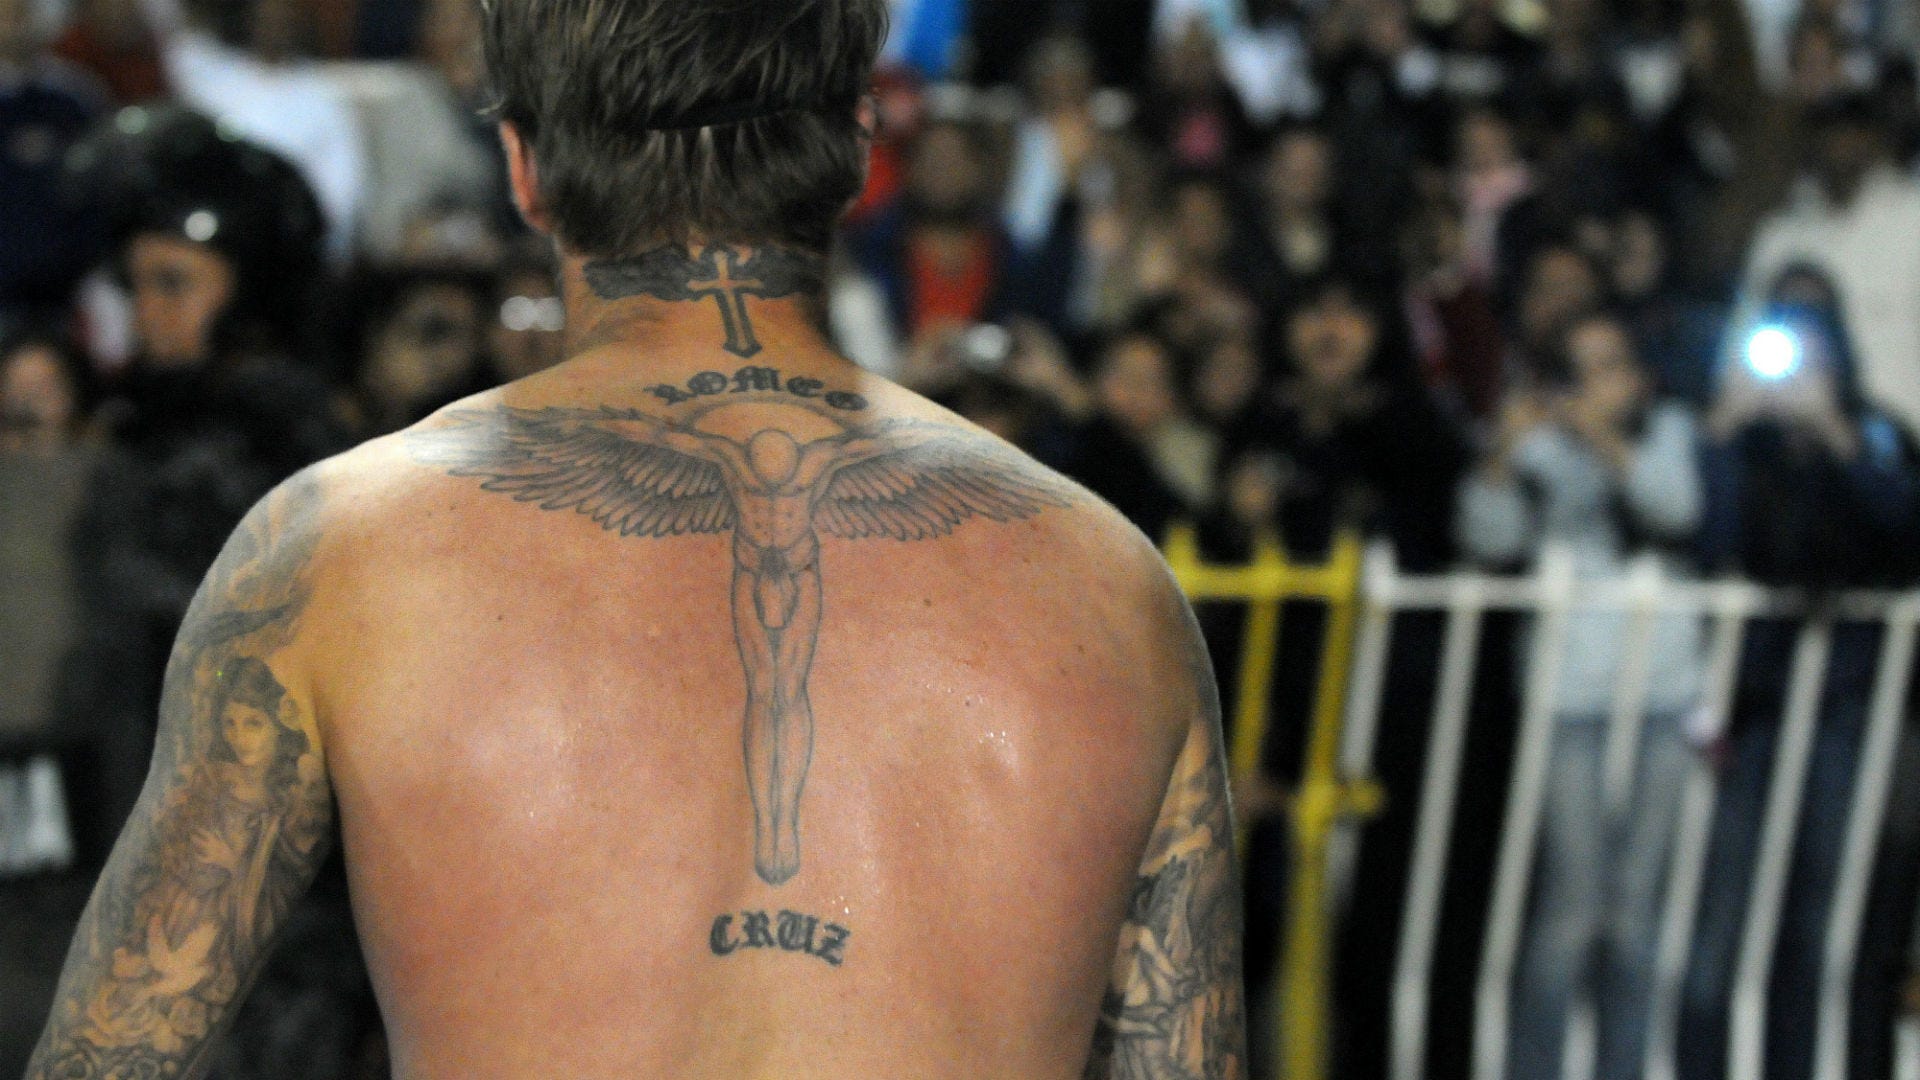 Micro-realistic rose tattoo done on Cruz Beckham's